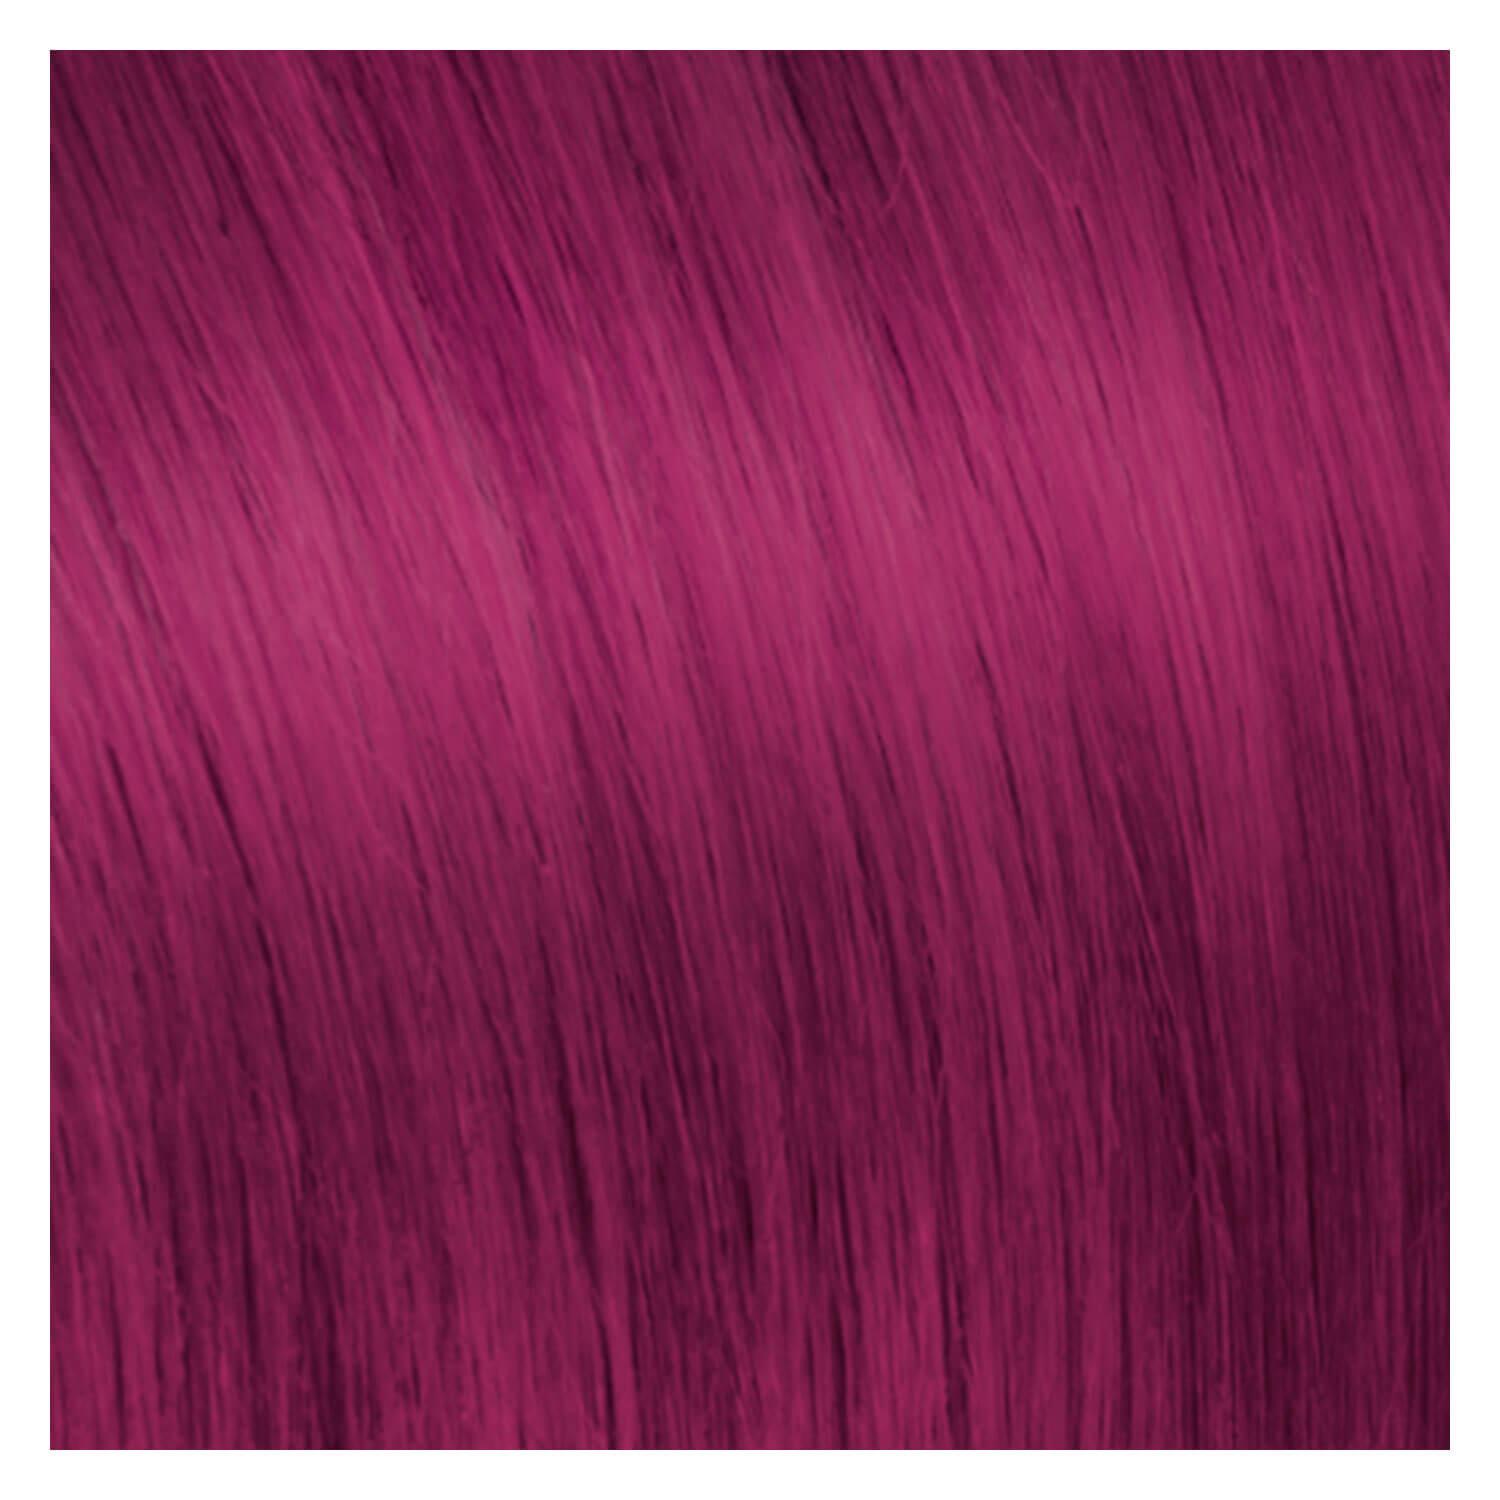 SHE Bonding-System Hair Extensions Fantasy Straight - Rötlich Violett 55/60cm